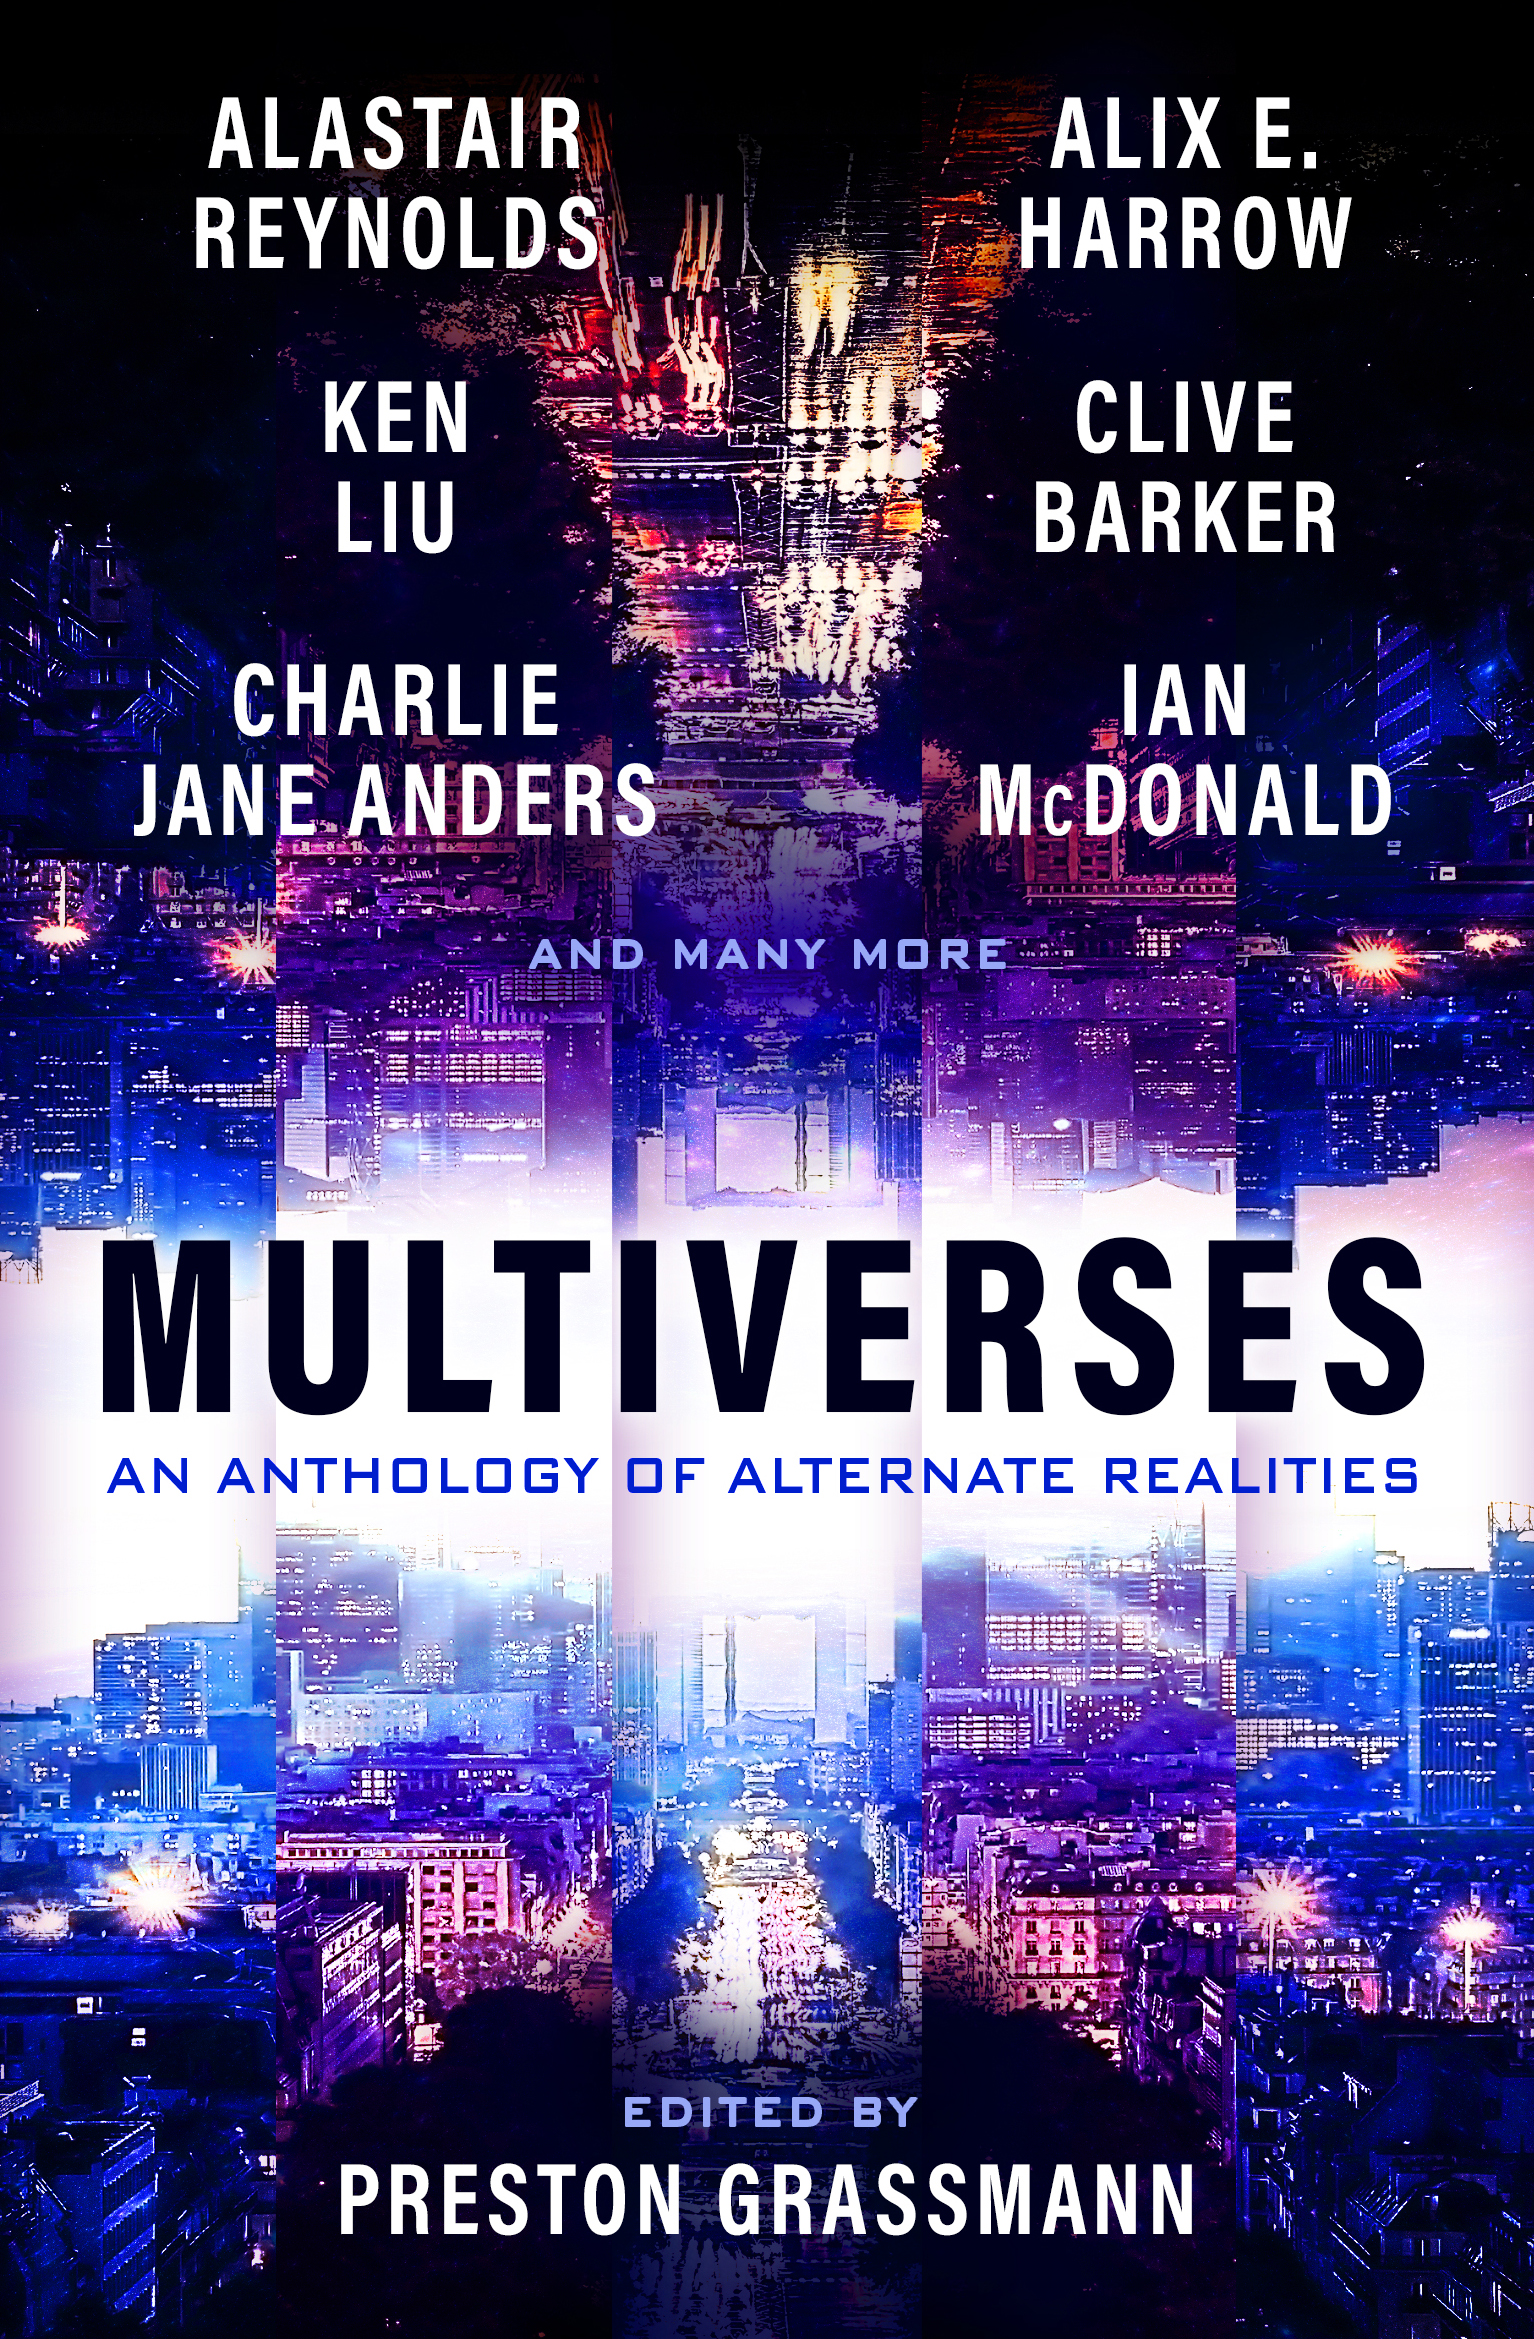 Preston Grassmann, Alix E. Harrow, Ken Liu (translator) Cixin Liu: Multiverses: An anthology of Alternate Realities (Paperback)